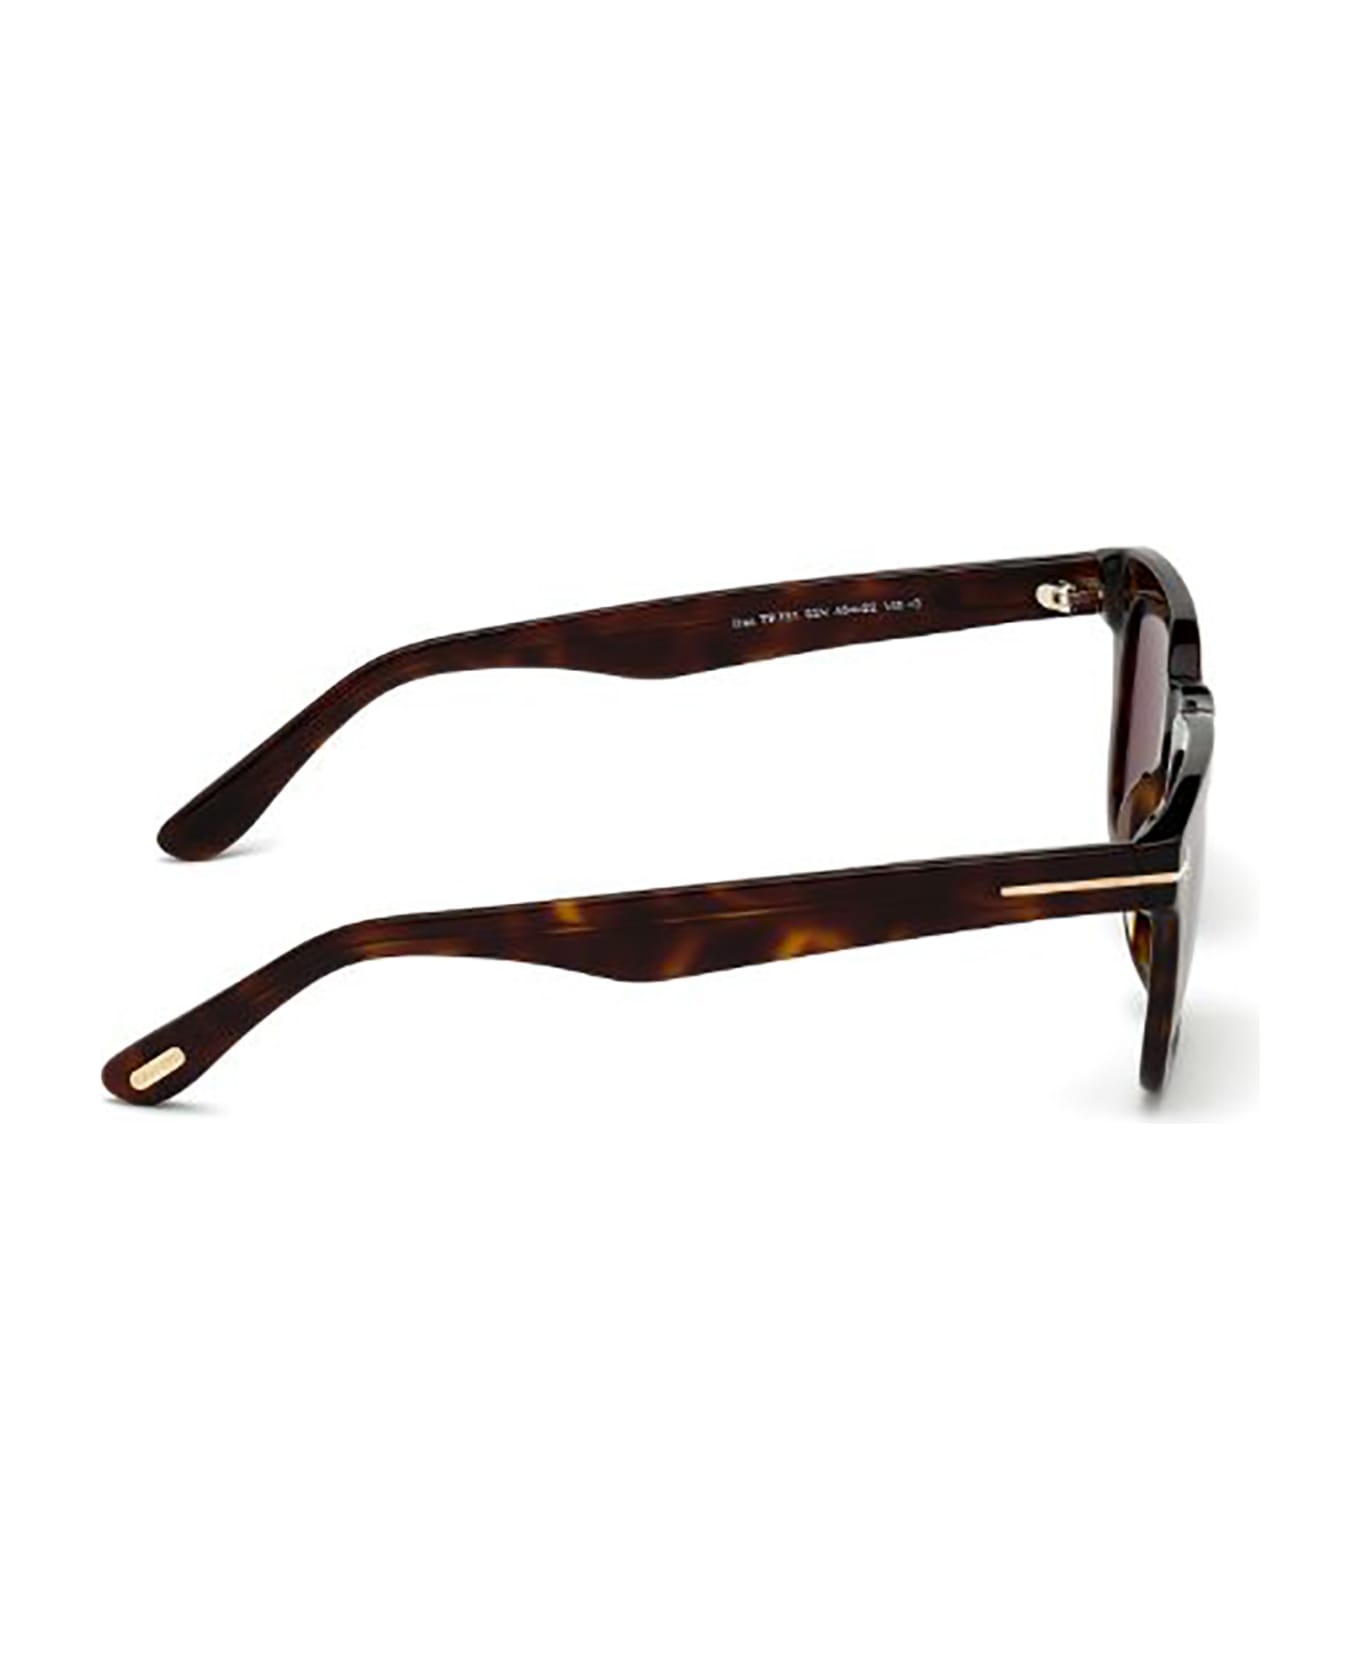 Tom Ford Eyewear FT0751 Sunglasses - N サングラス